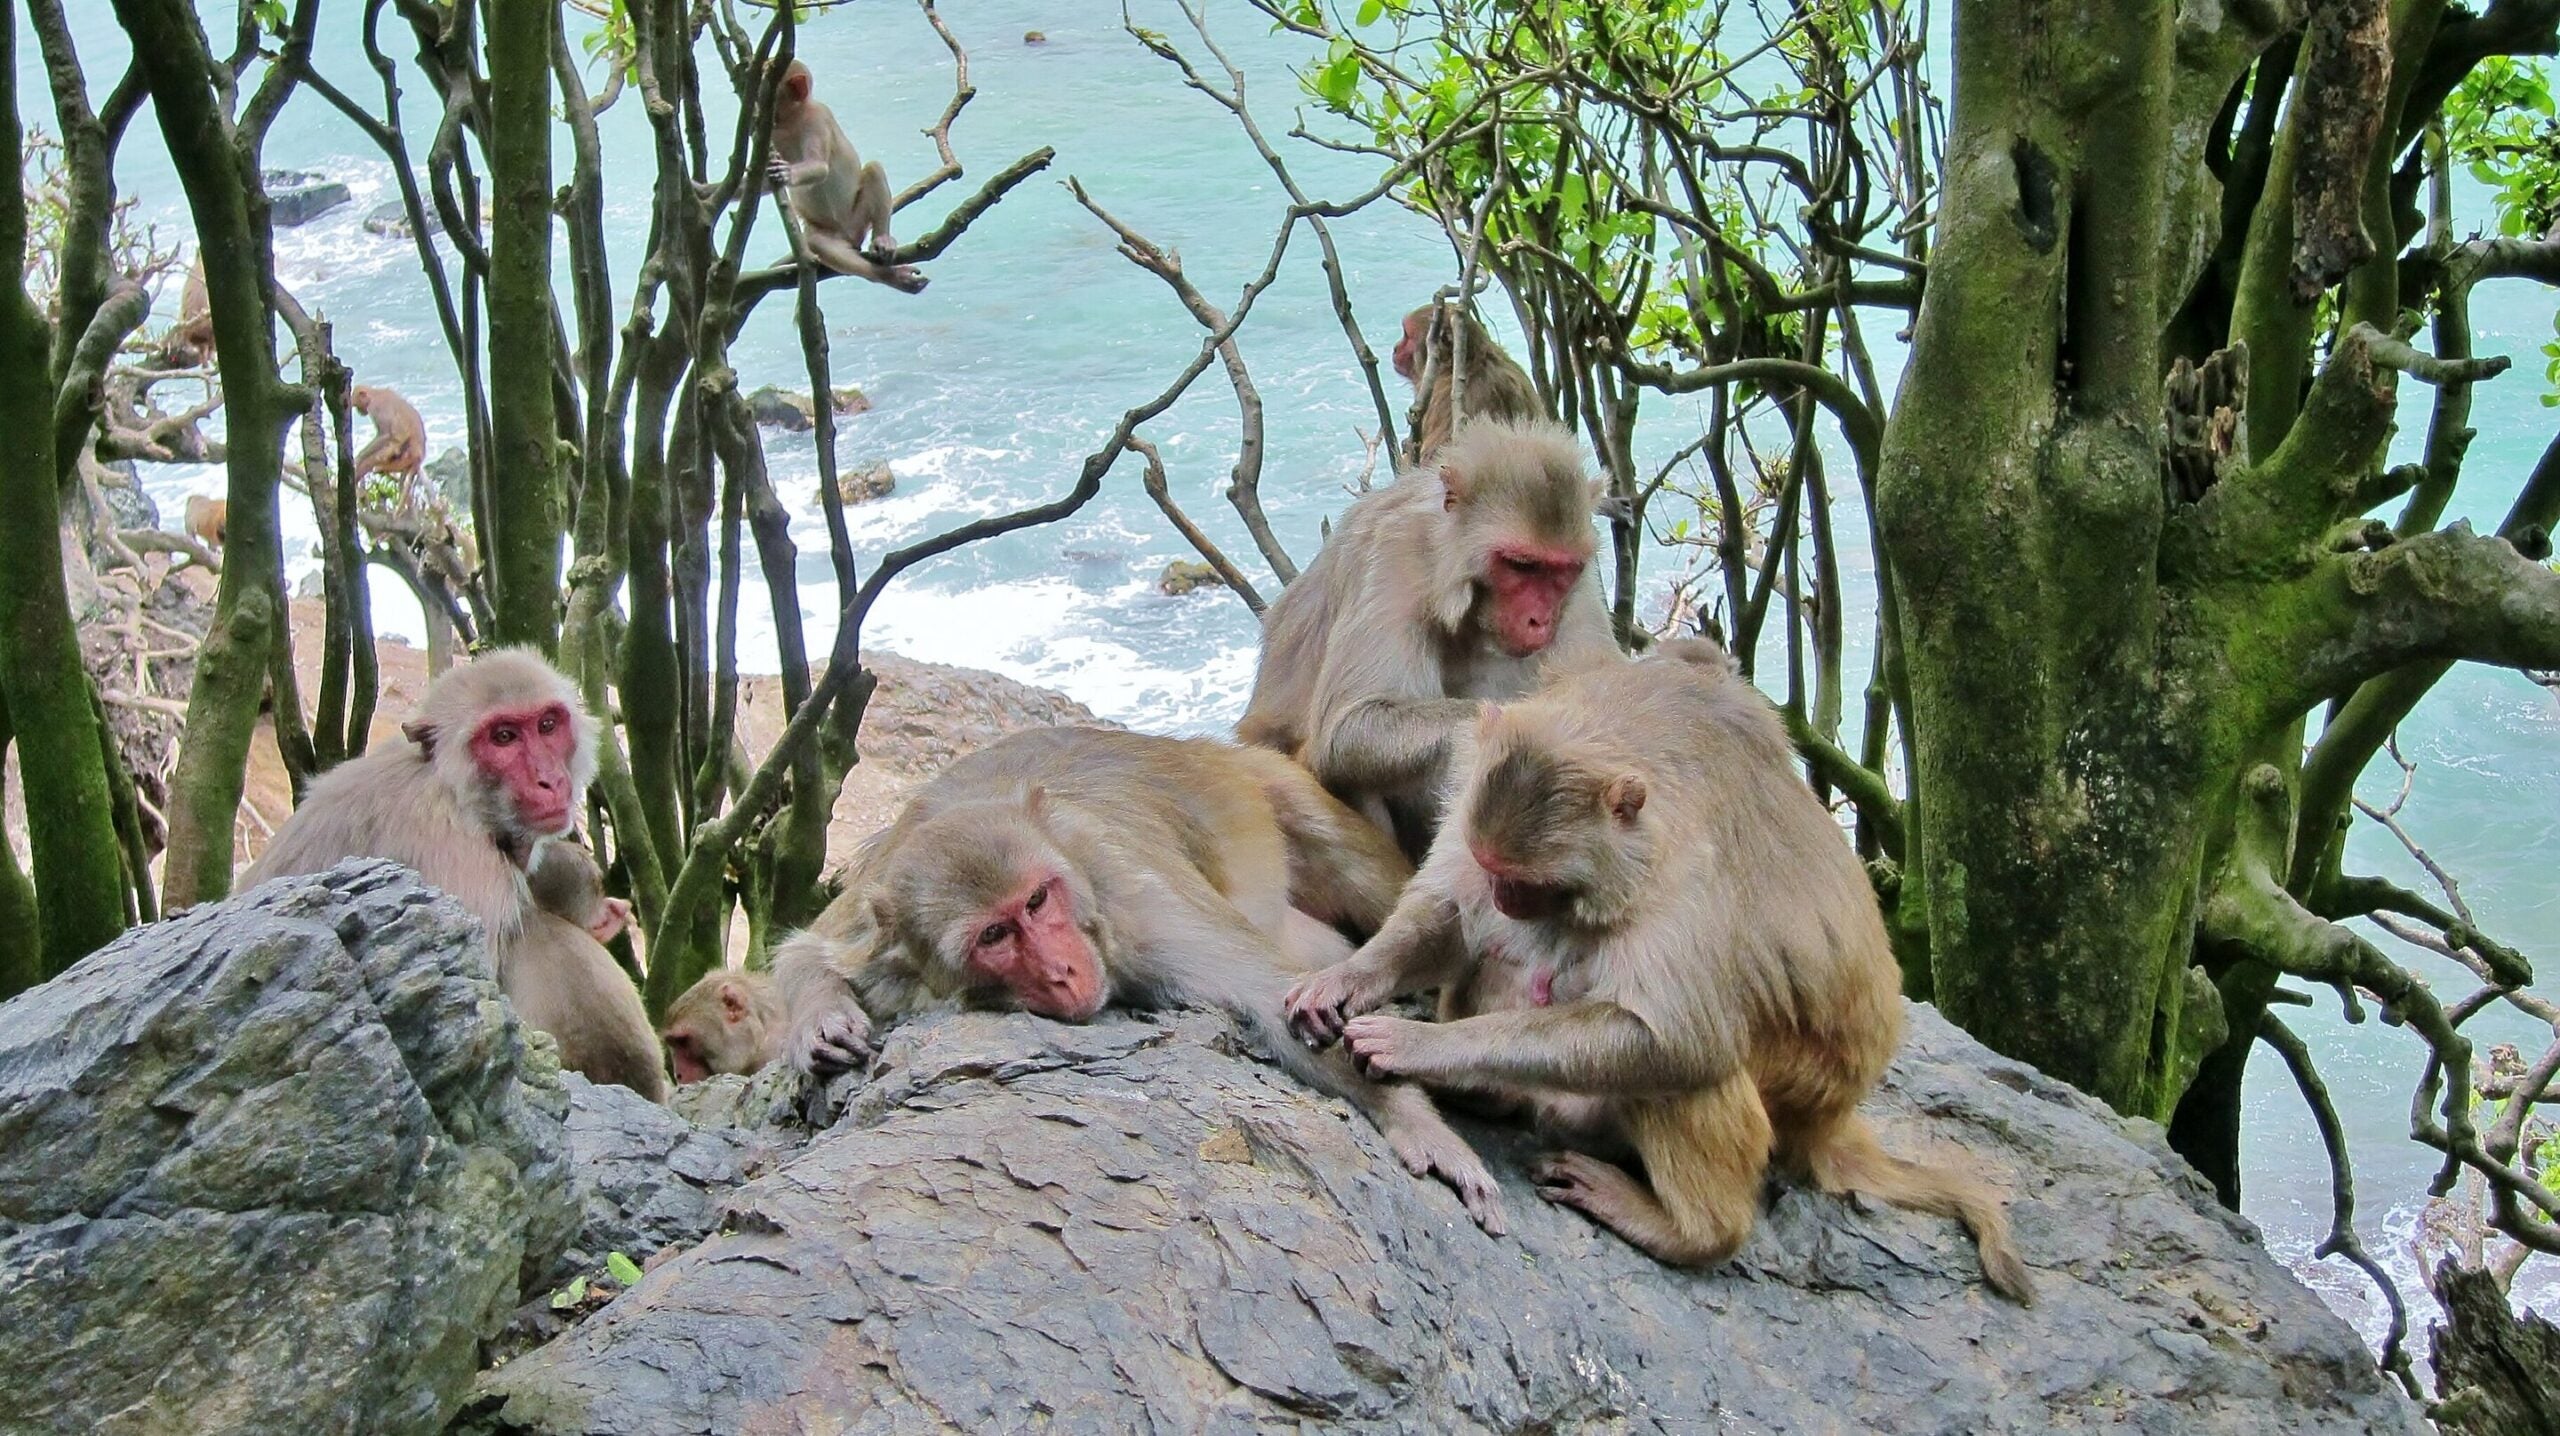 Monkeys with close friends have friendlier gut bacteria